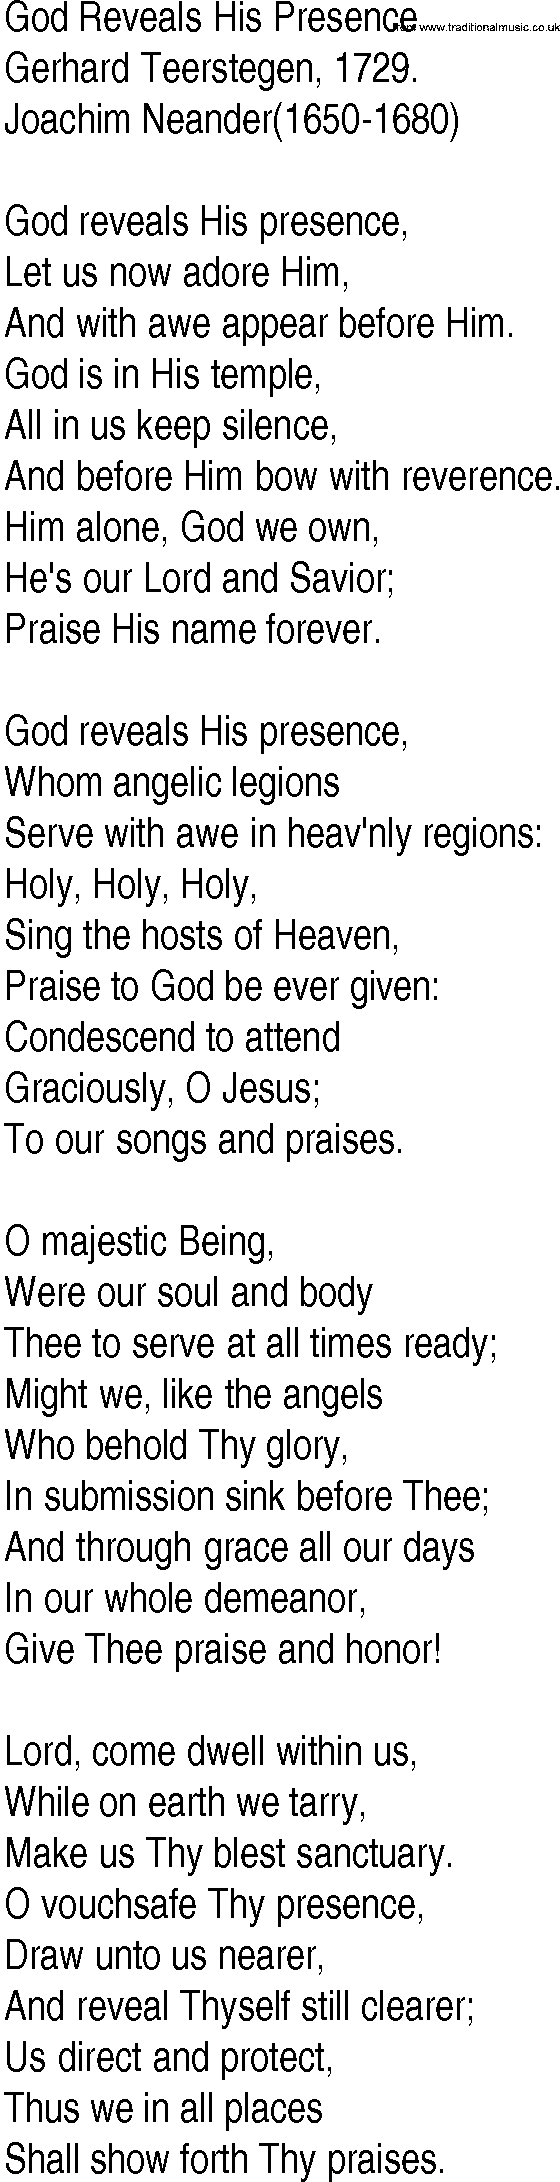 Hymn and Gospel Song: God Reveals His Presence by Gerhard Teerstegen lyrics